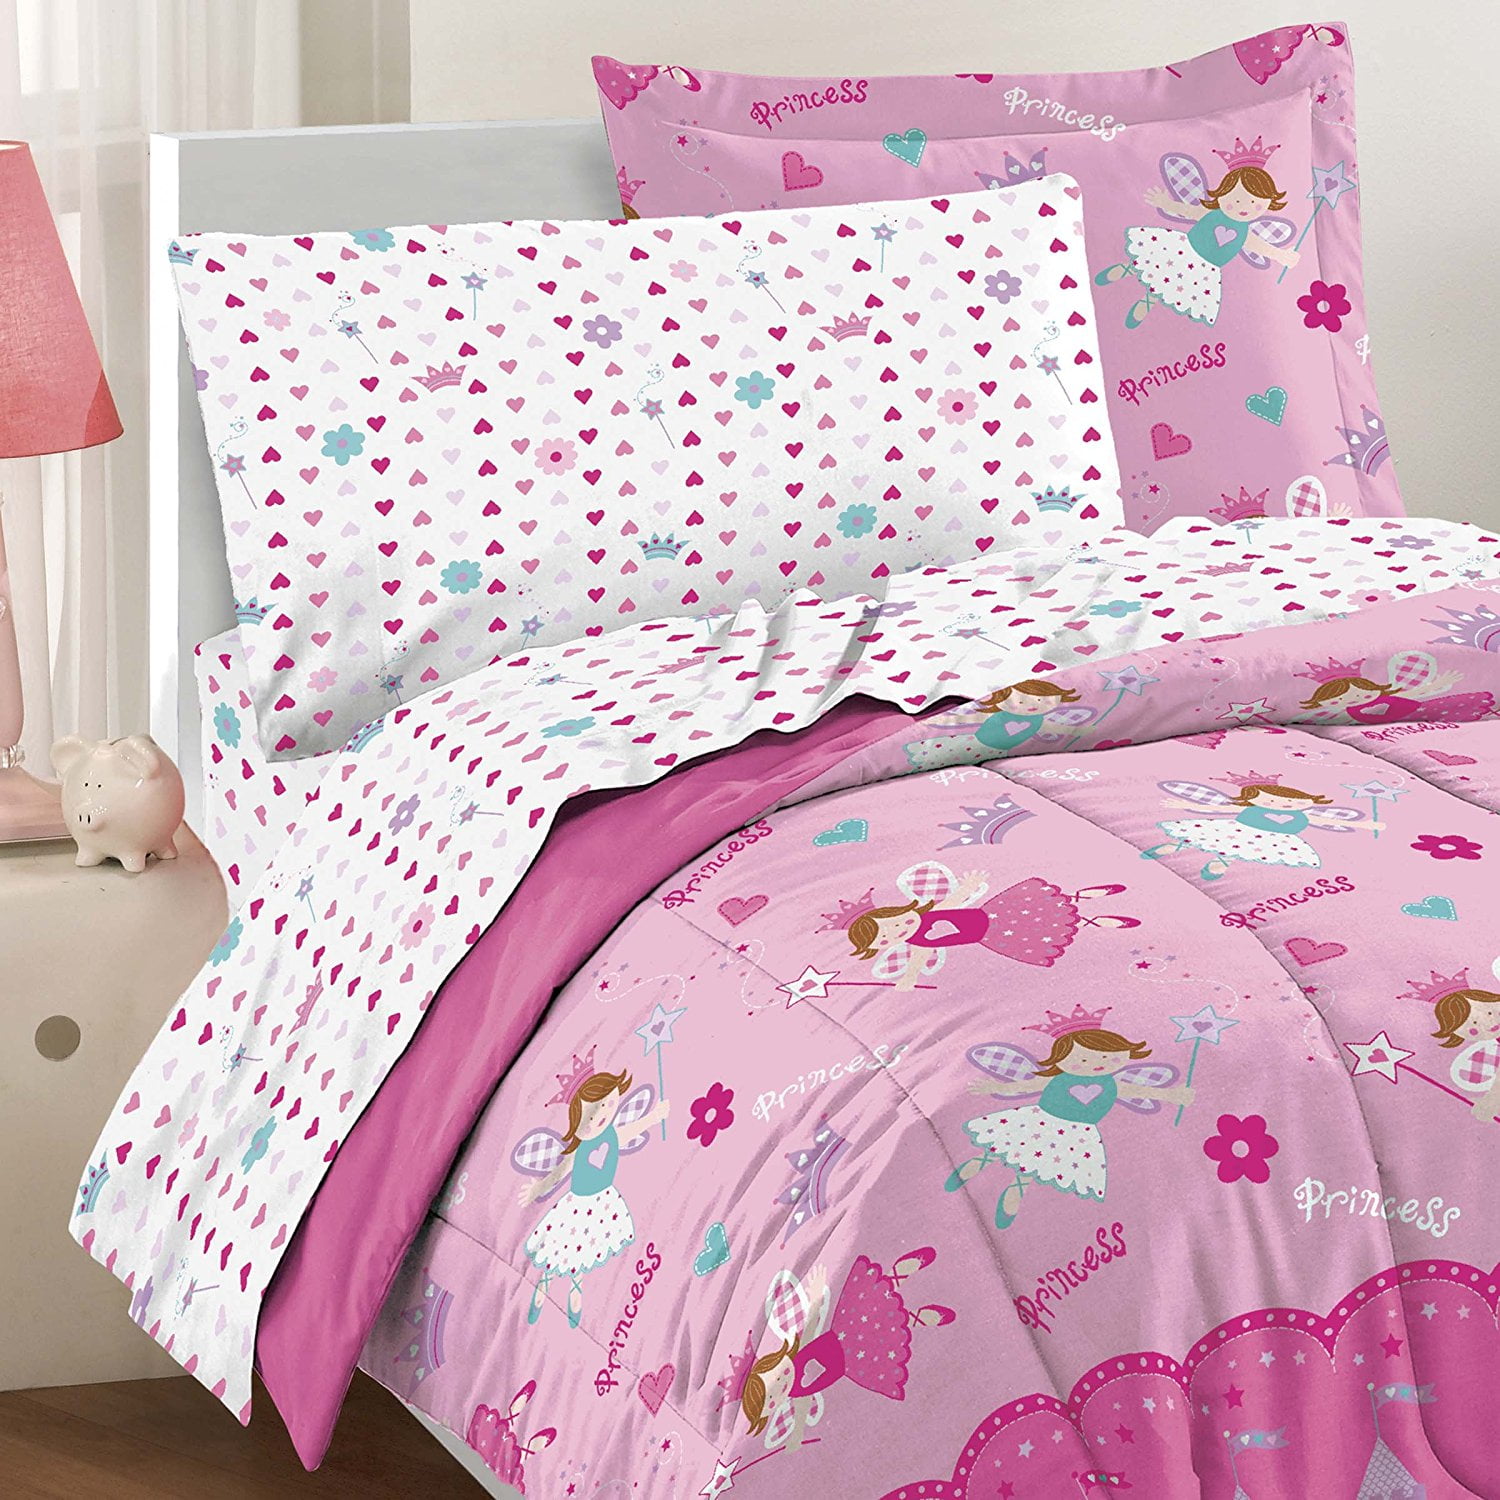 Magical Princess Hearts Pink Girls Bedding Comforter Sheet Set Twin 2-Day Ship 